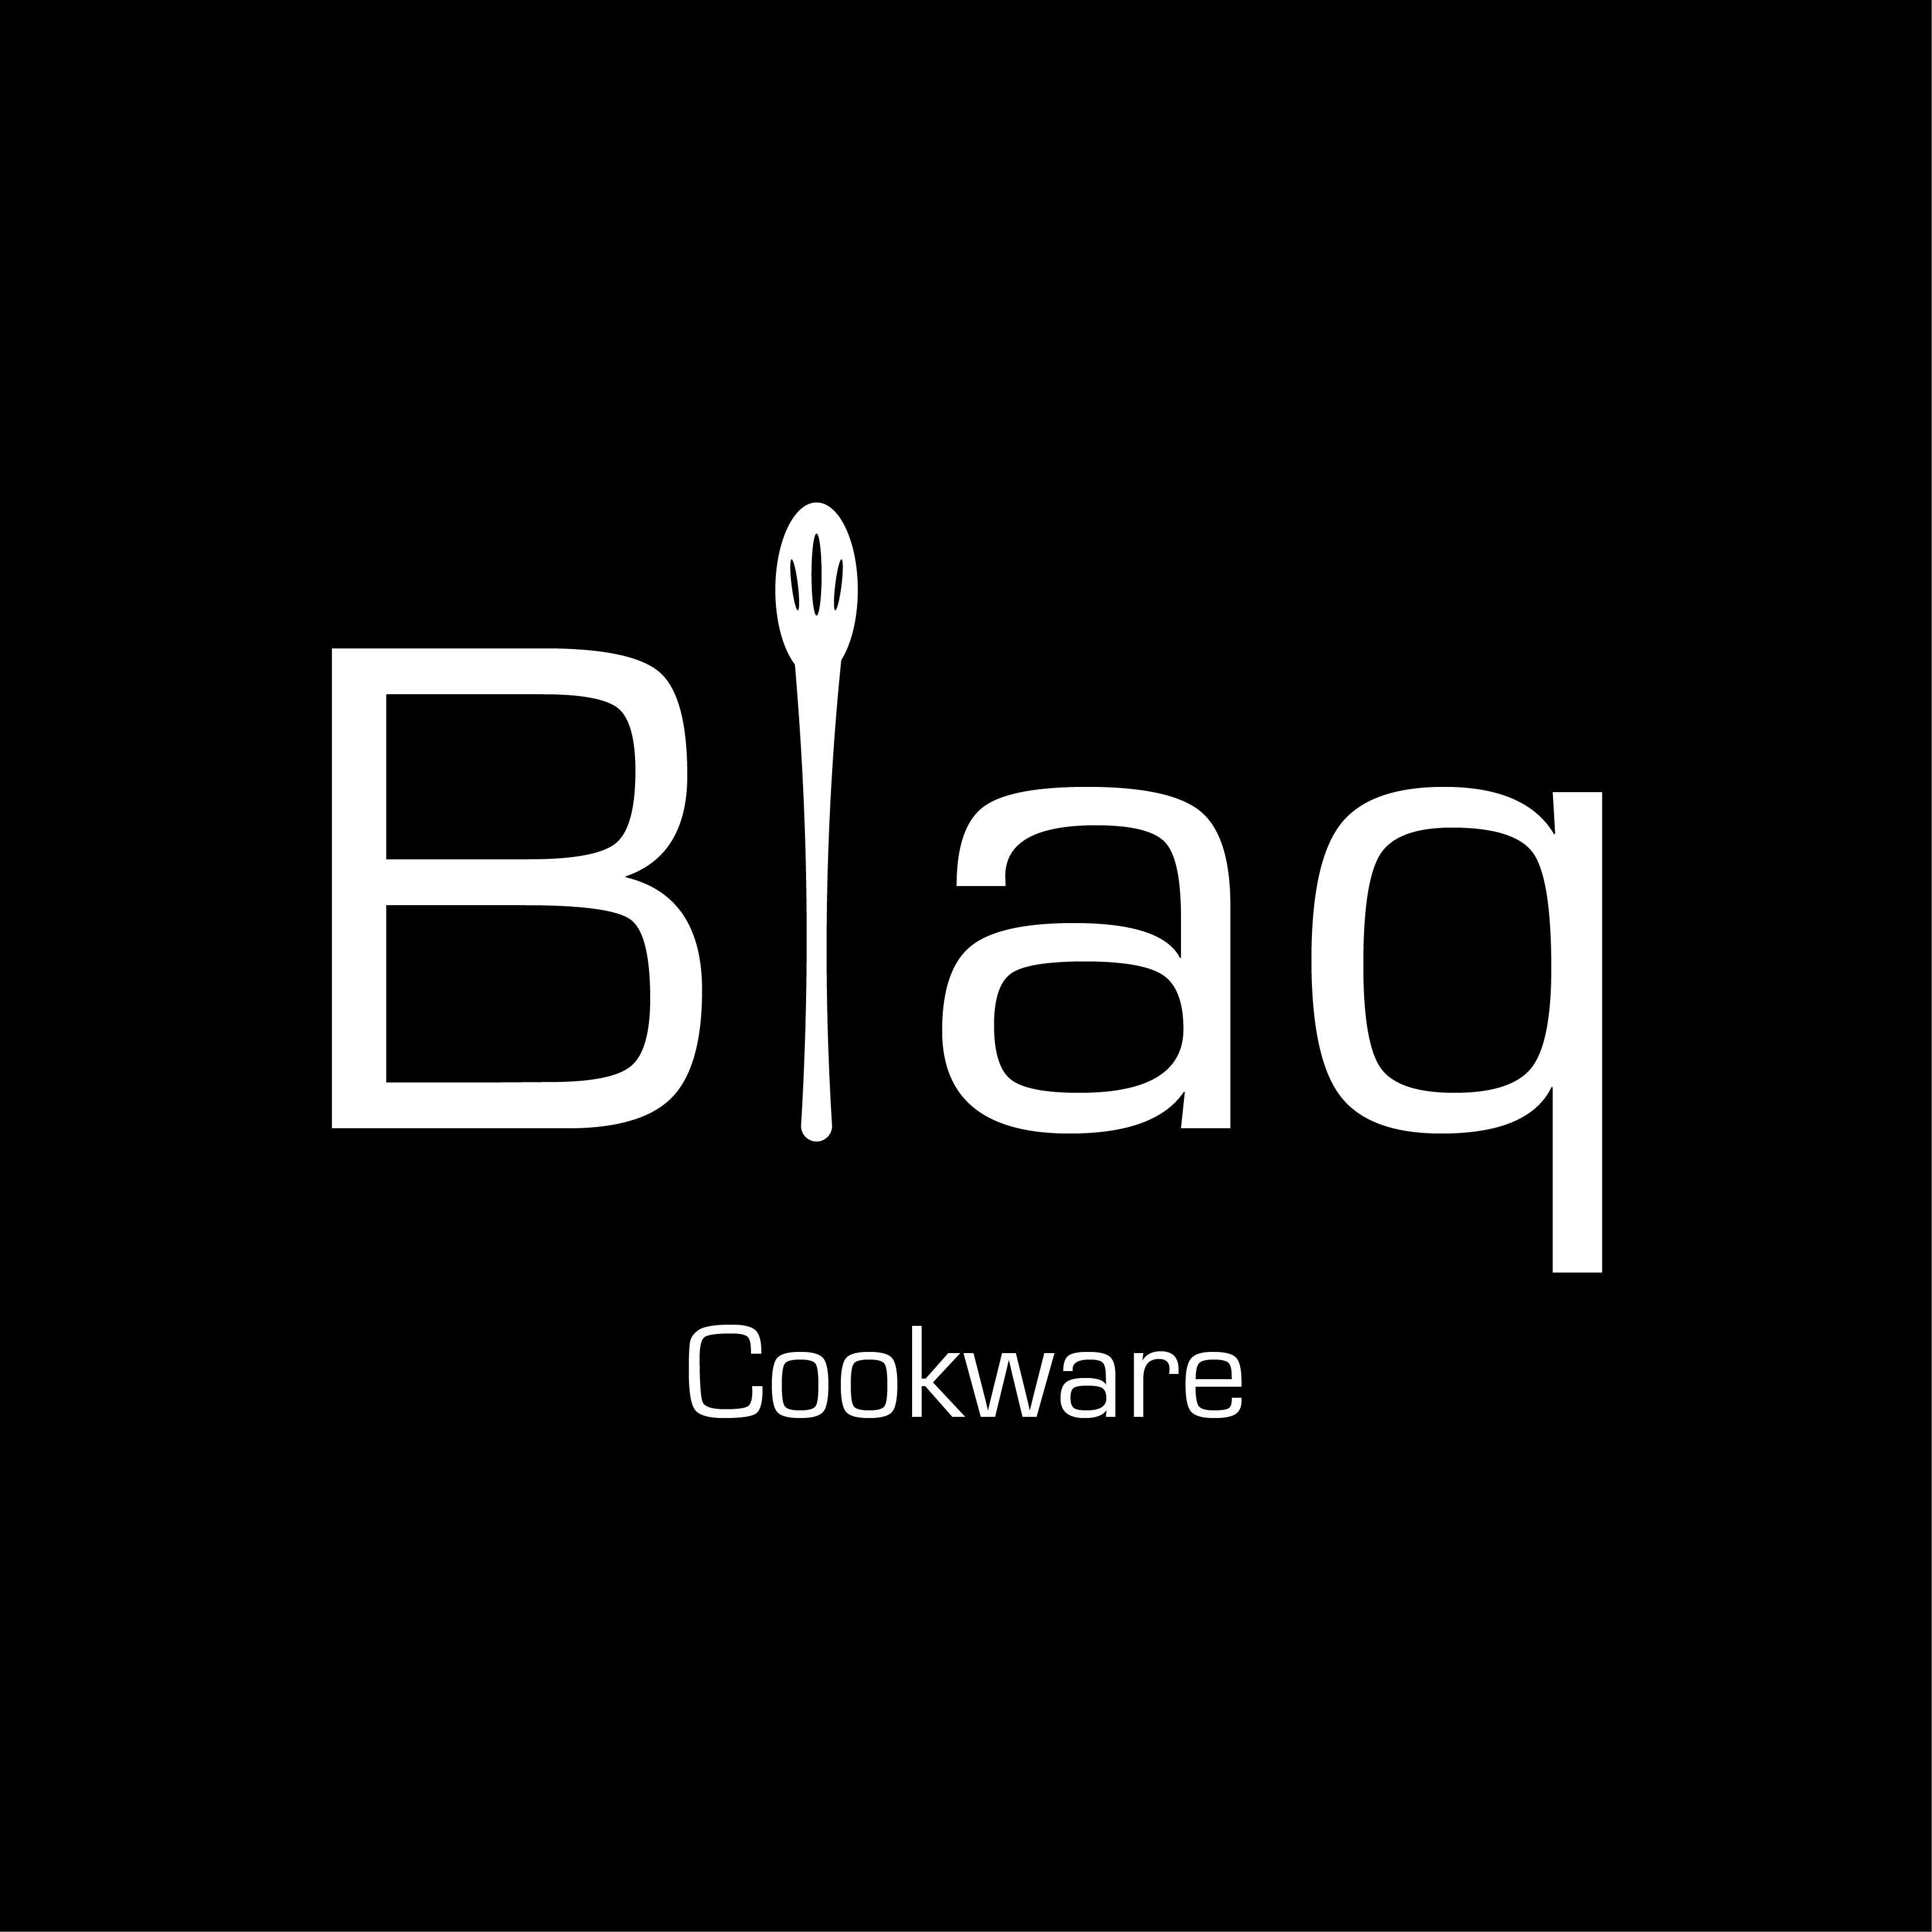 Blaq cookware logo youtube